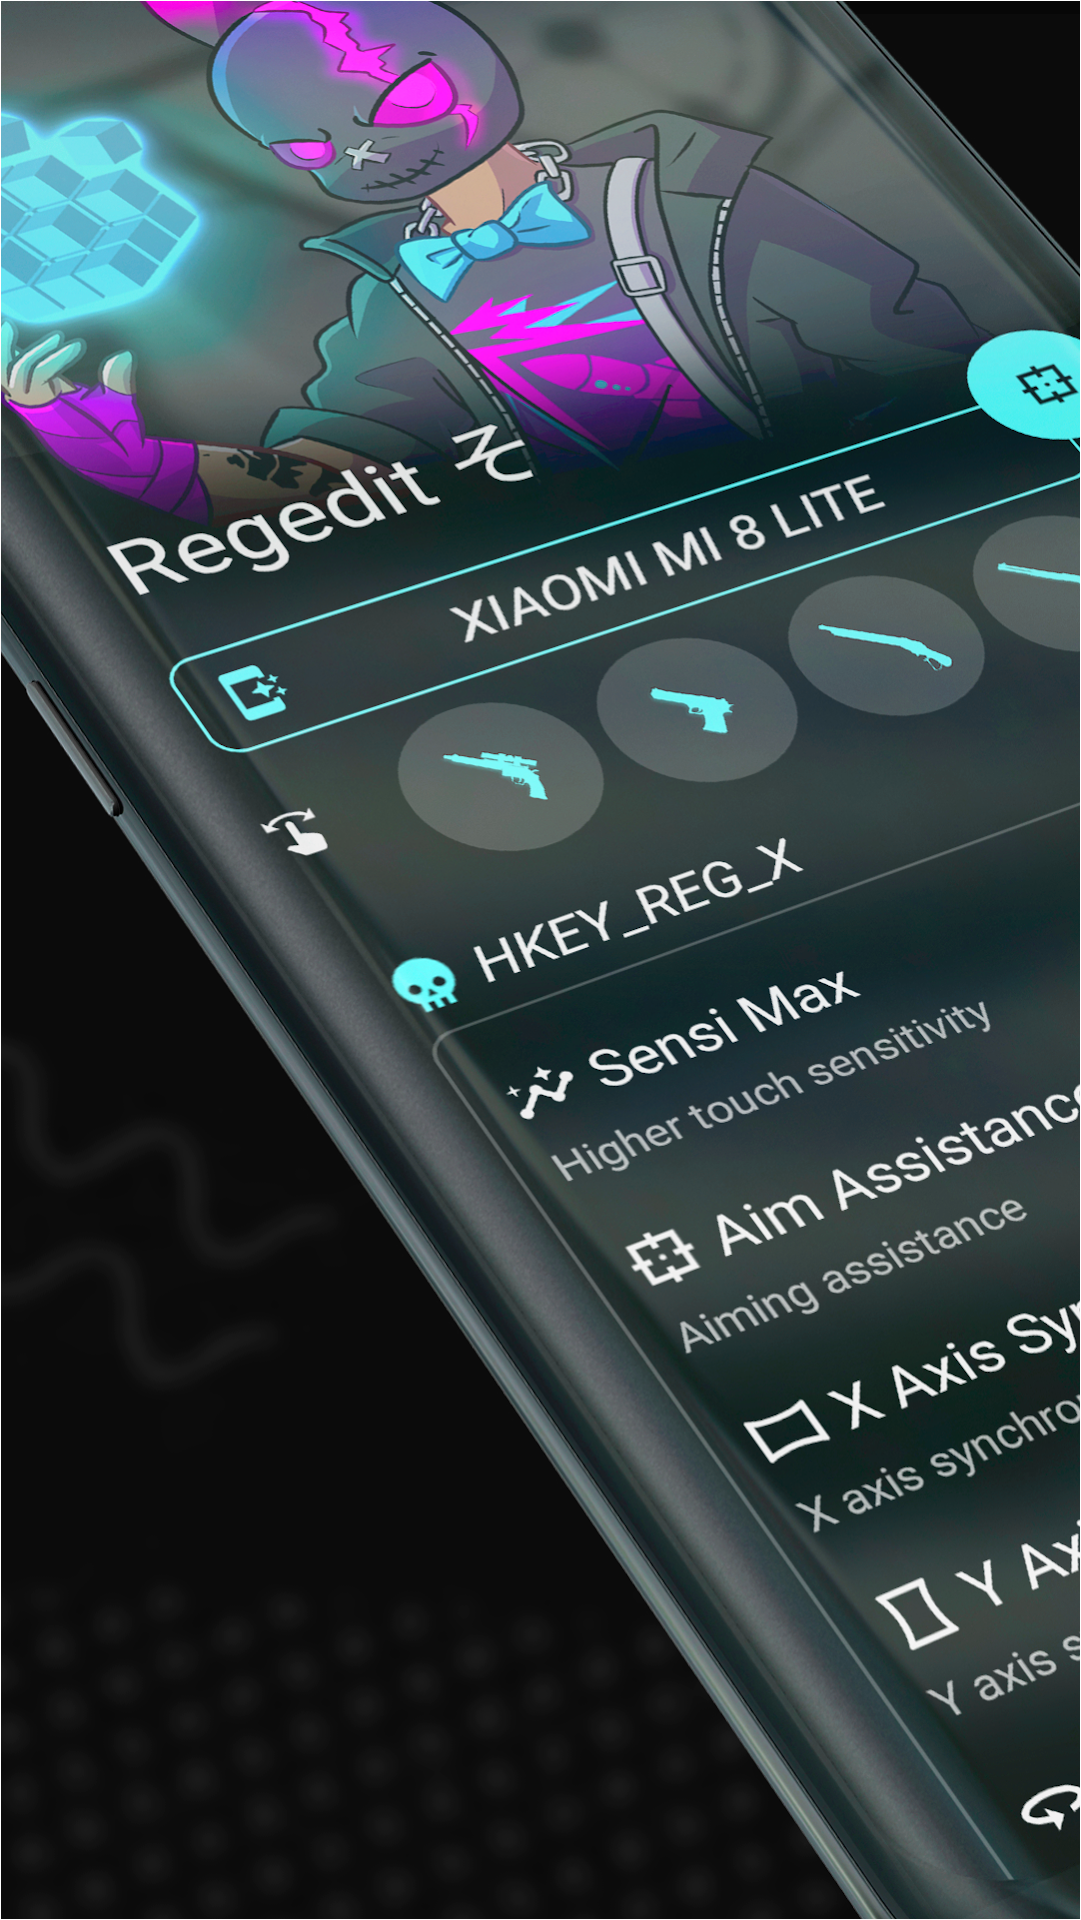 FFH4X Regedit Apk Download Latest Version Rau Android